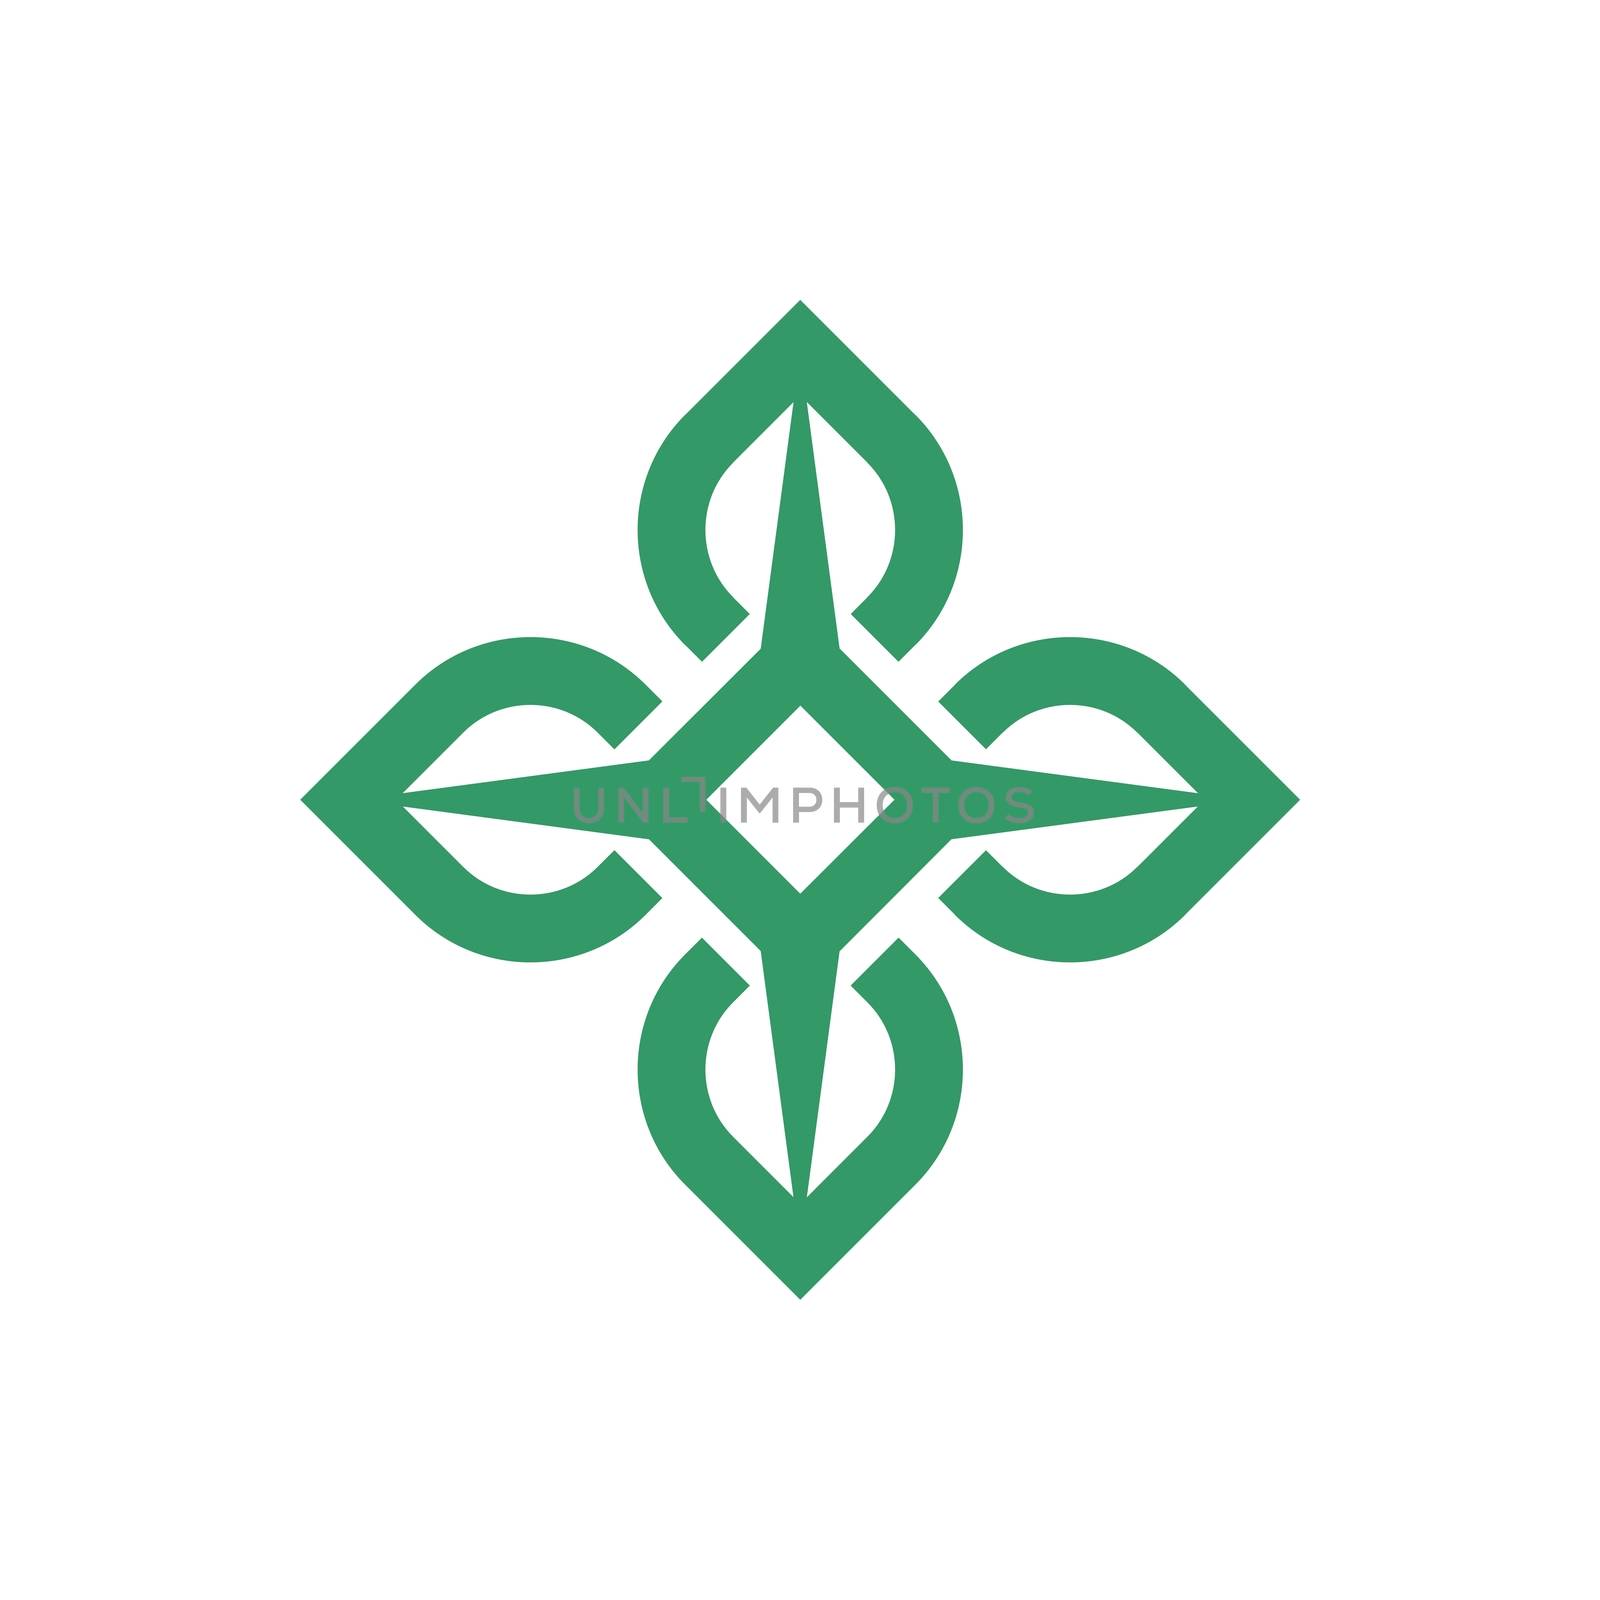 Green Star Flower Ornamental logo template Illustration Design. Vector EPS 10. by soponyono1